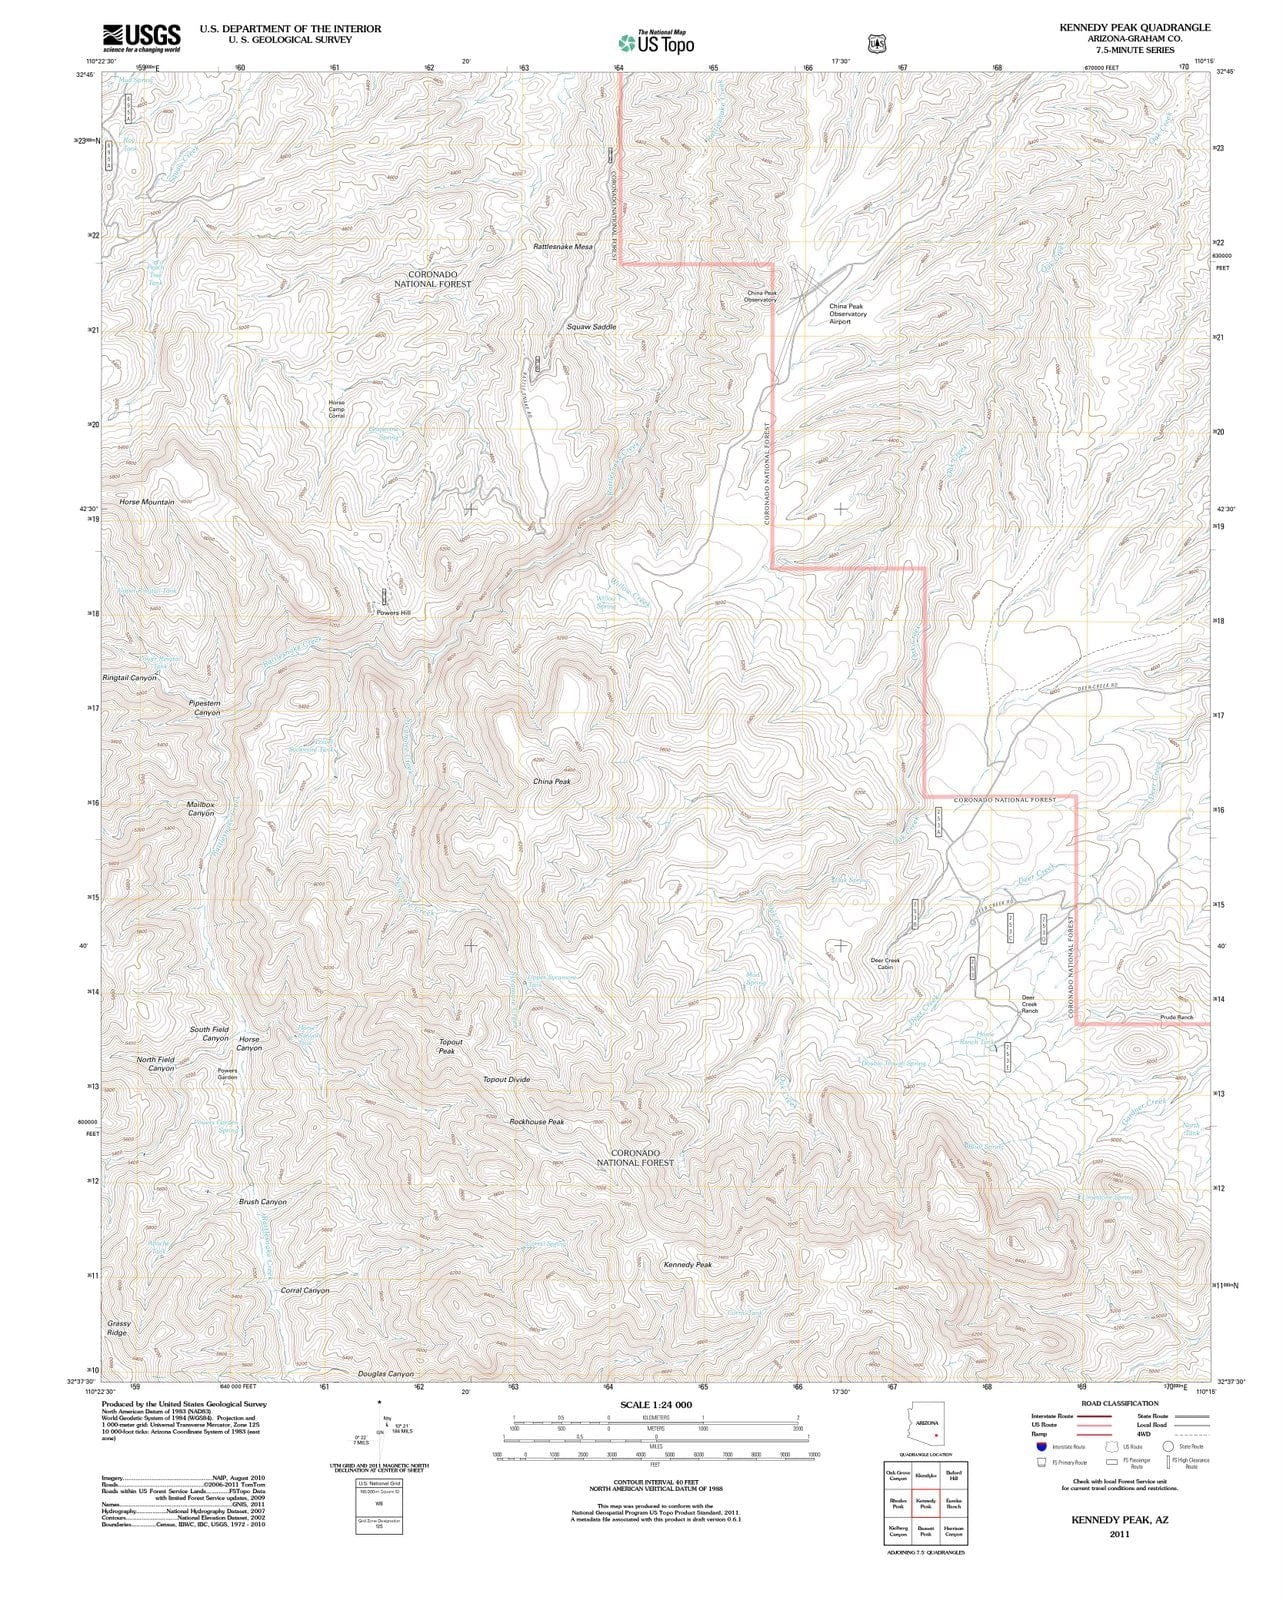 2011 Kennedy Peak, AZ - Arizona - USGS Topographic Map